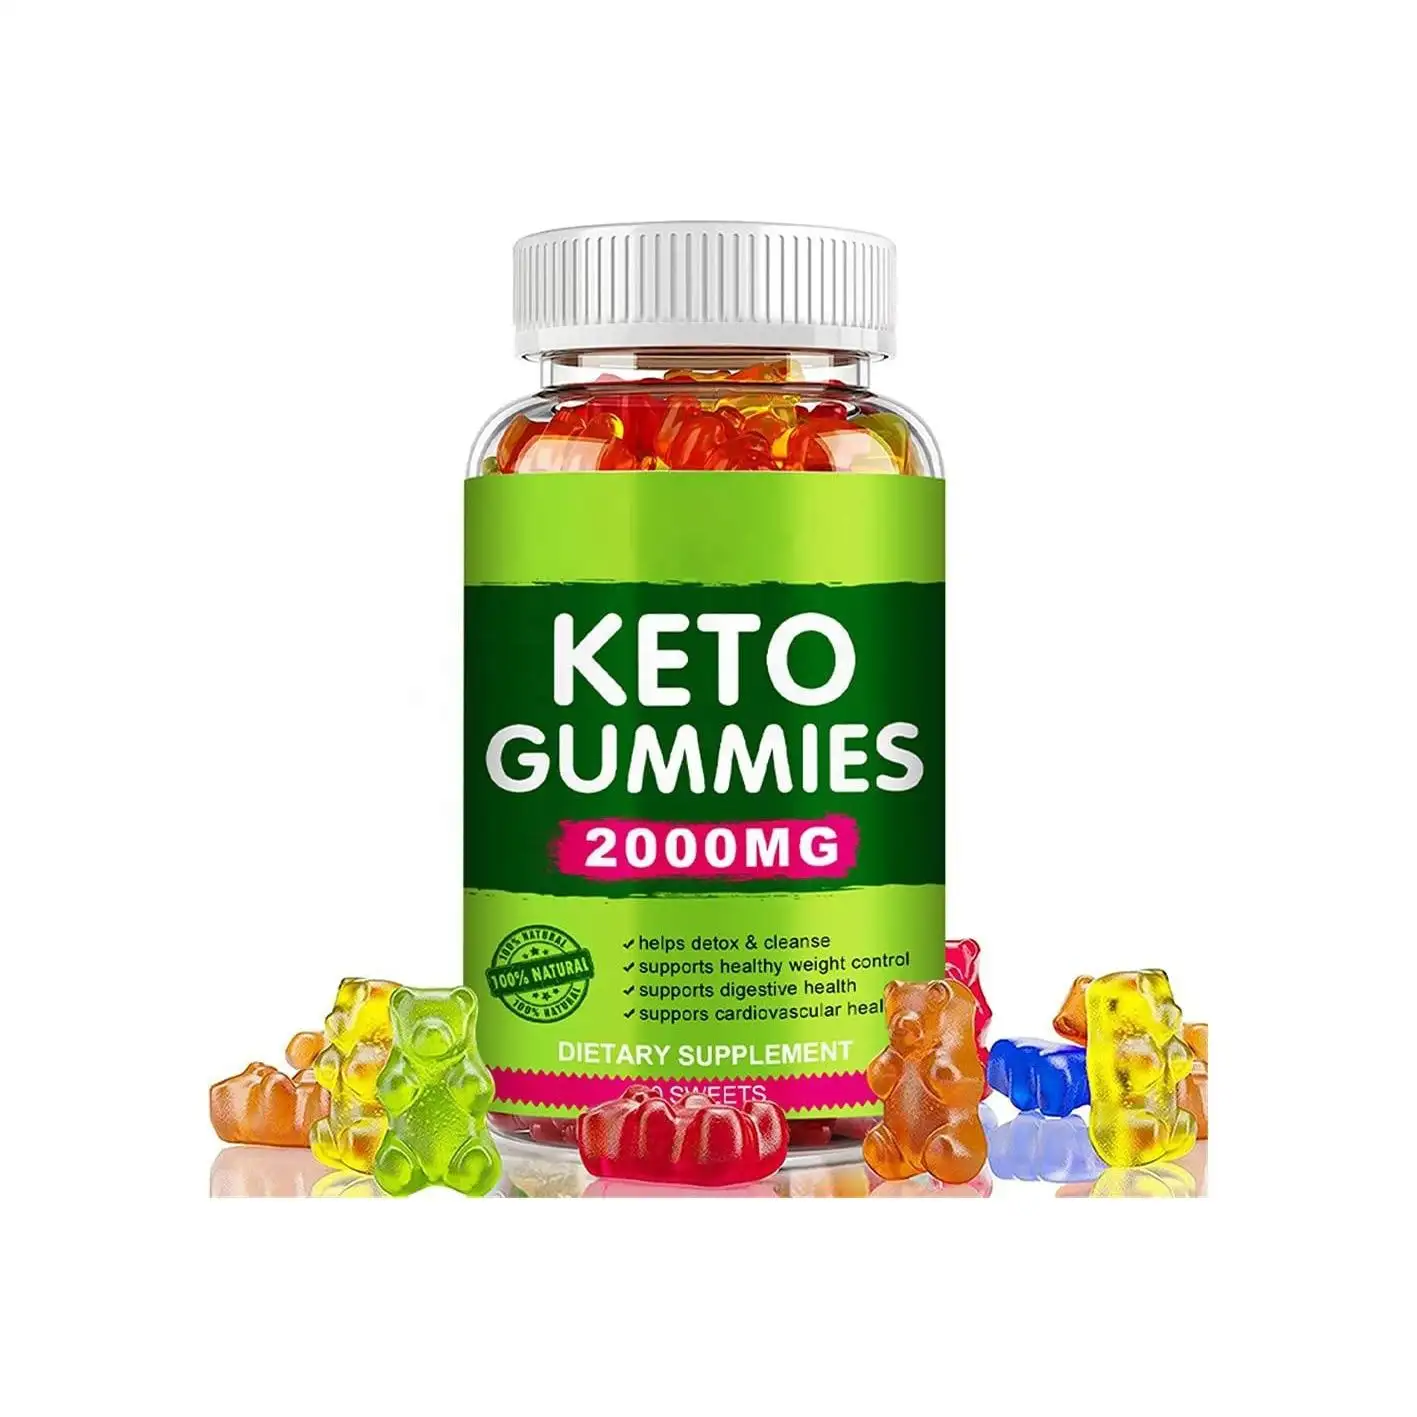 Keto Apple Cider Vinegar Gummies Private label flat belly gummies helps detox cleanse healthy weight control 60 gummies